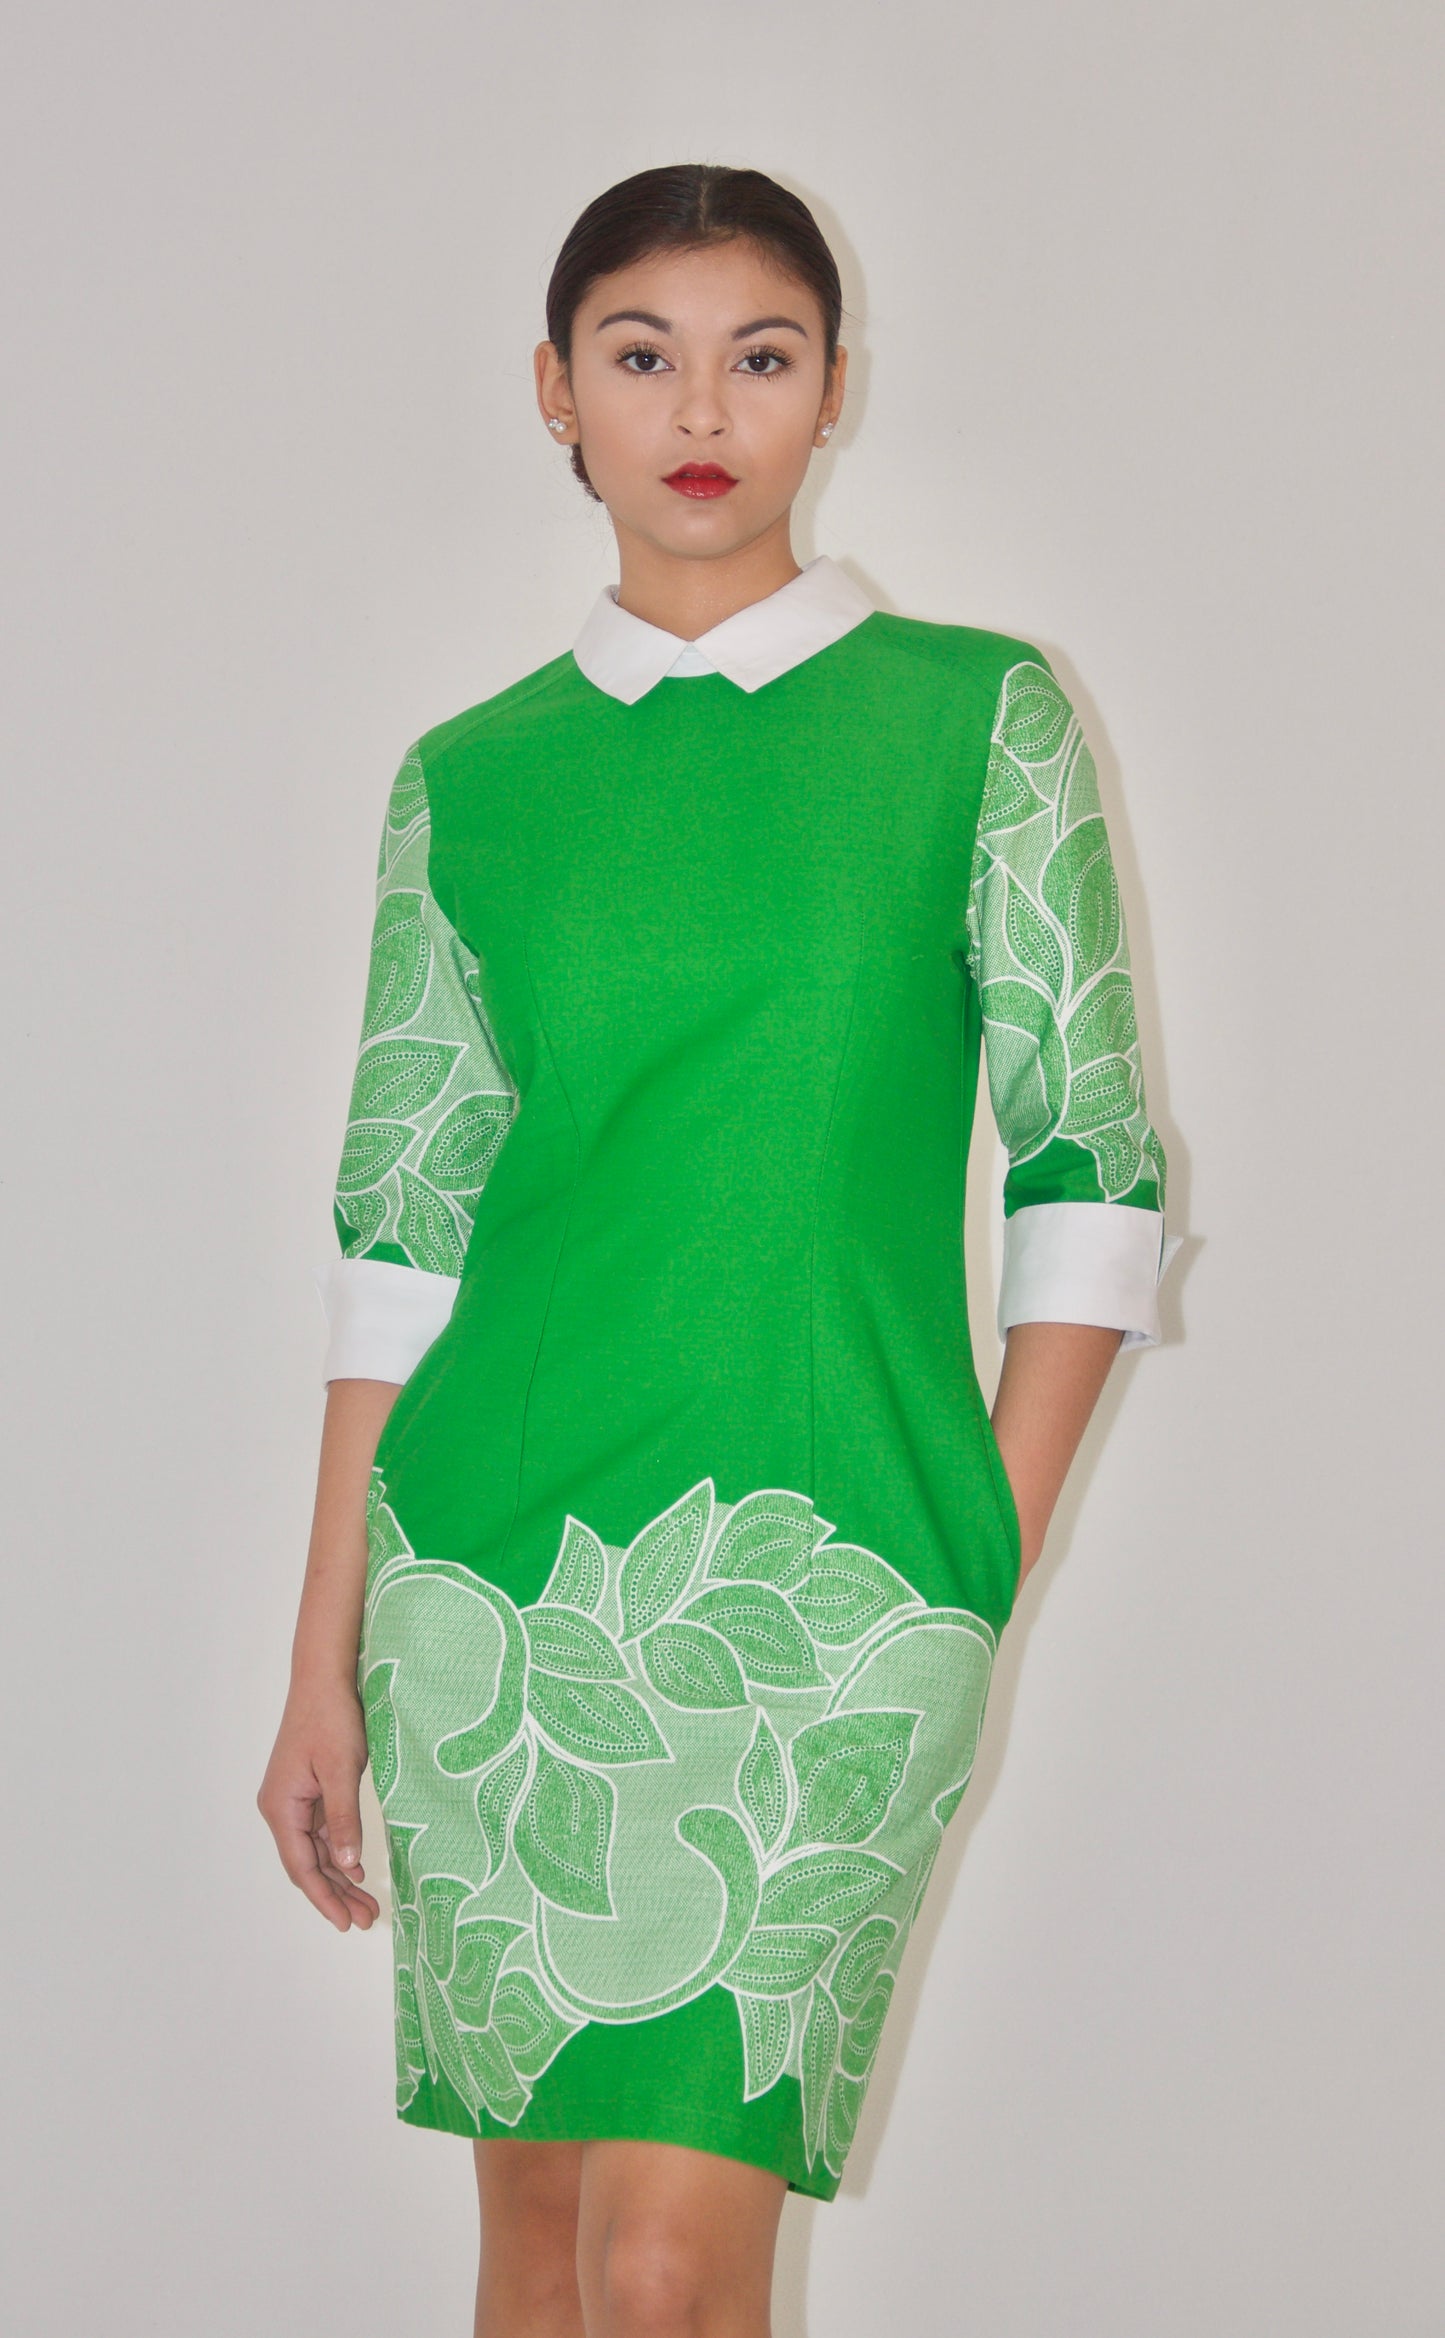 Green and White Print Cotton Poplin Sheath Dress